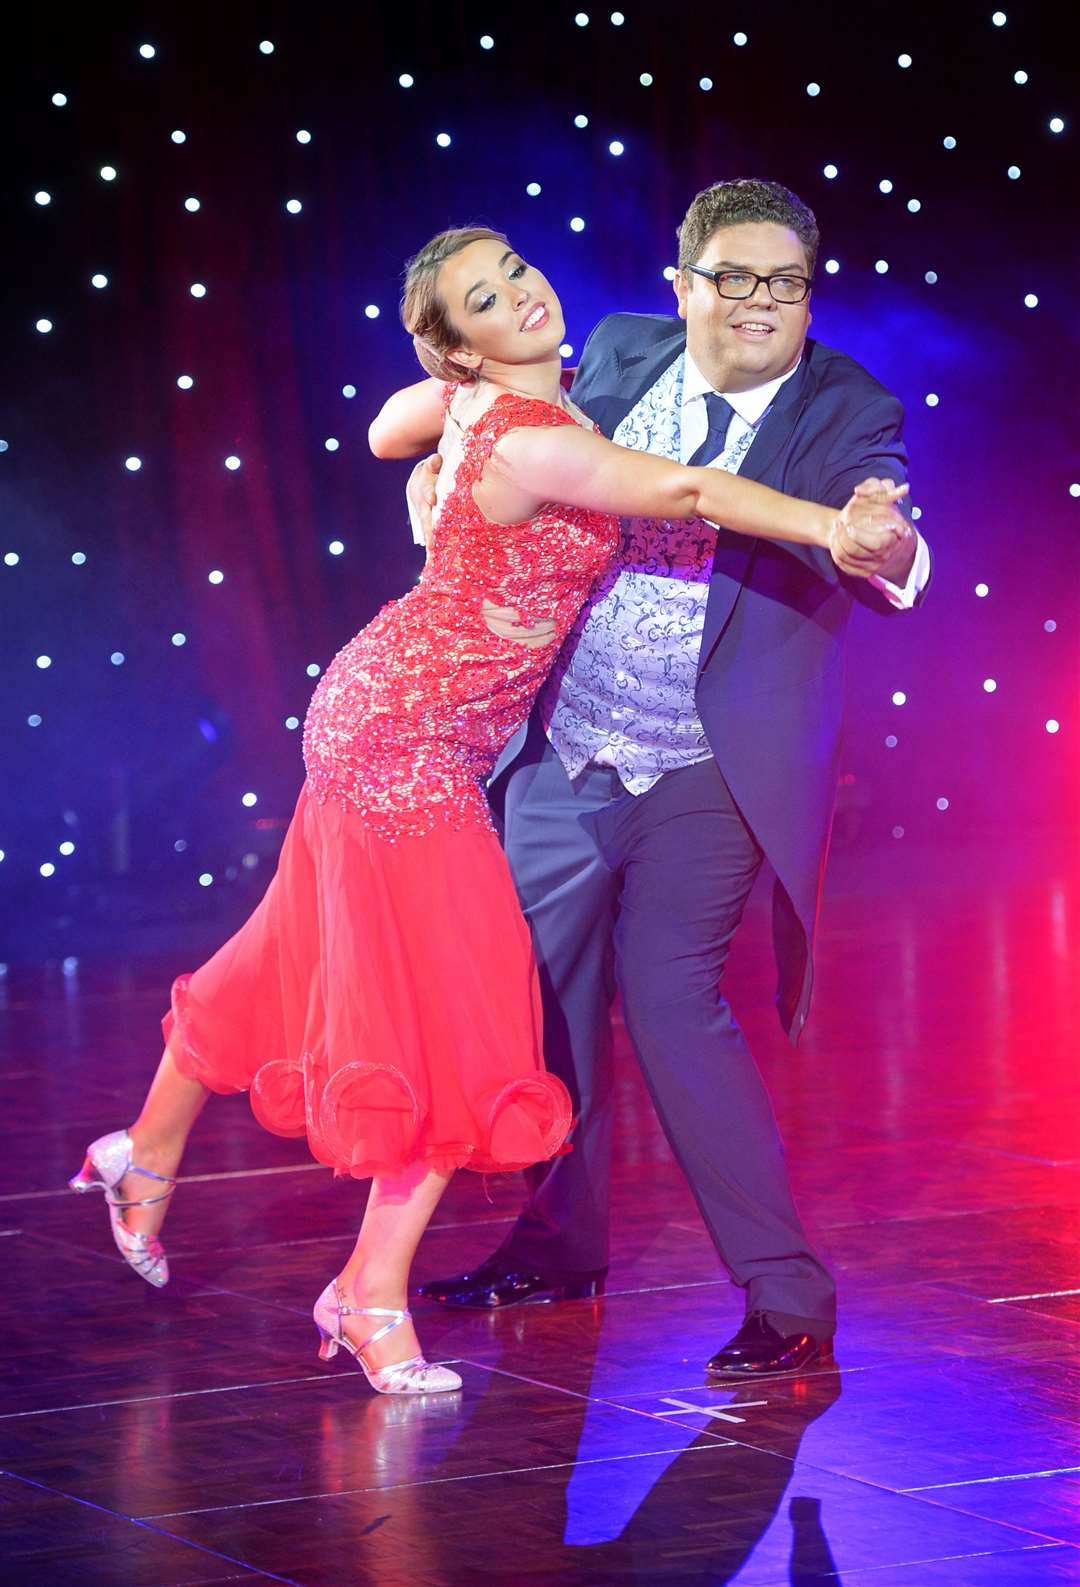 Highland News & Media's Darrel Paterson with dance partner Gemma Kellacher in 2019.